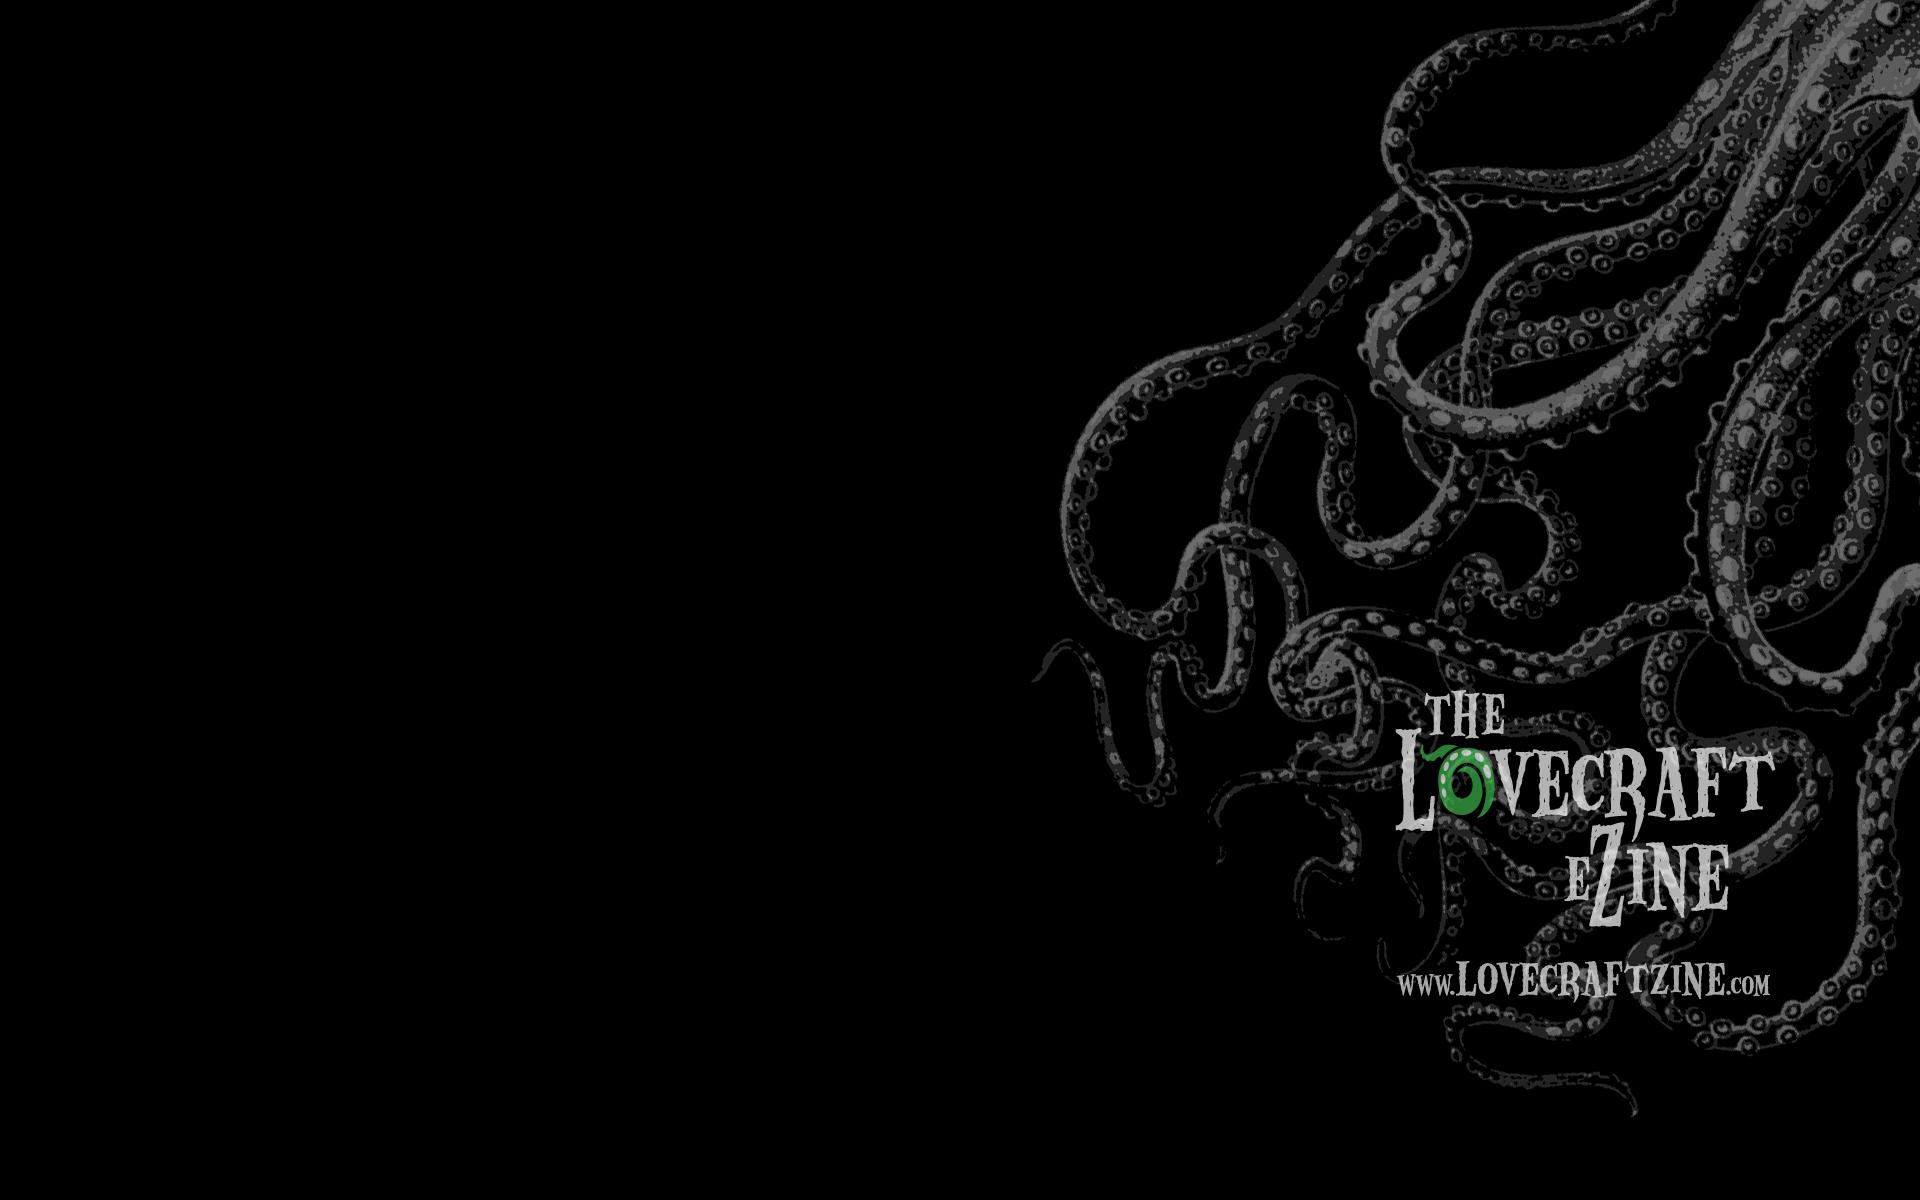 Lovecraft Ezine Wallpaper